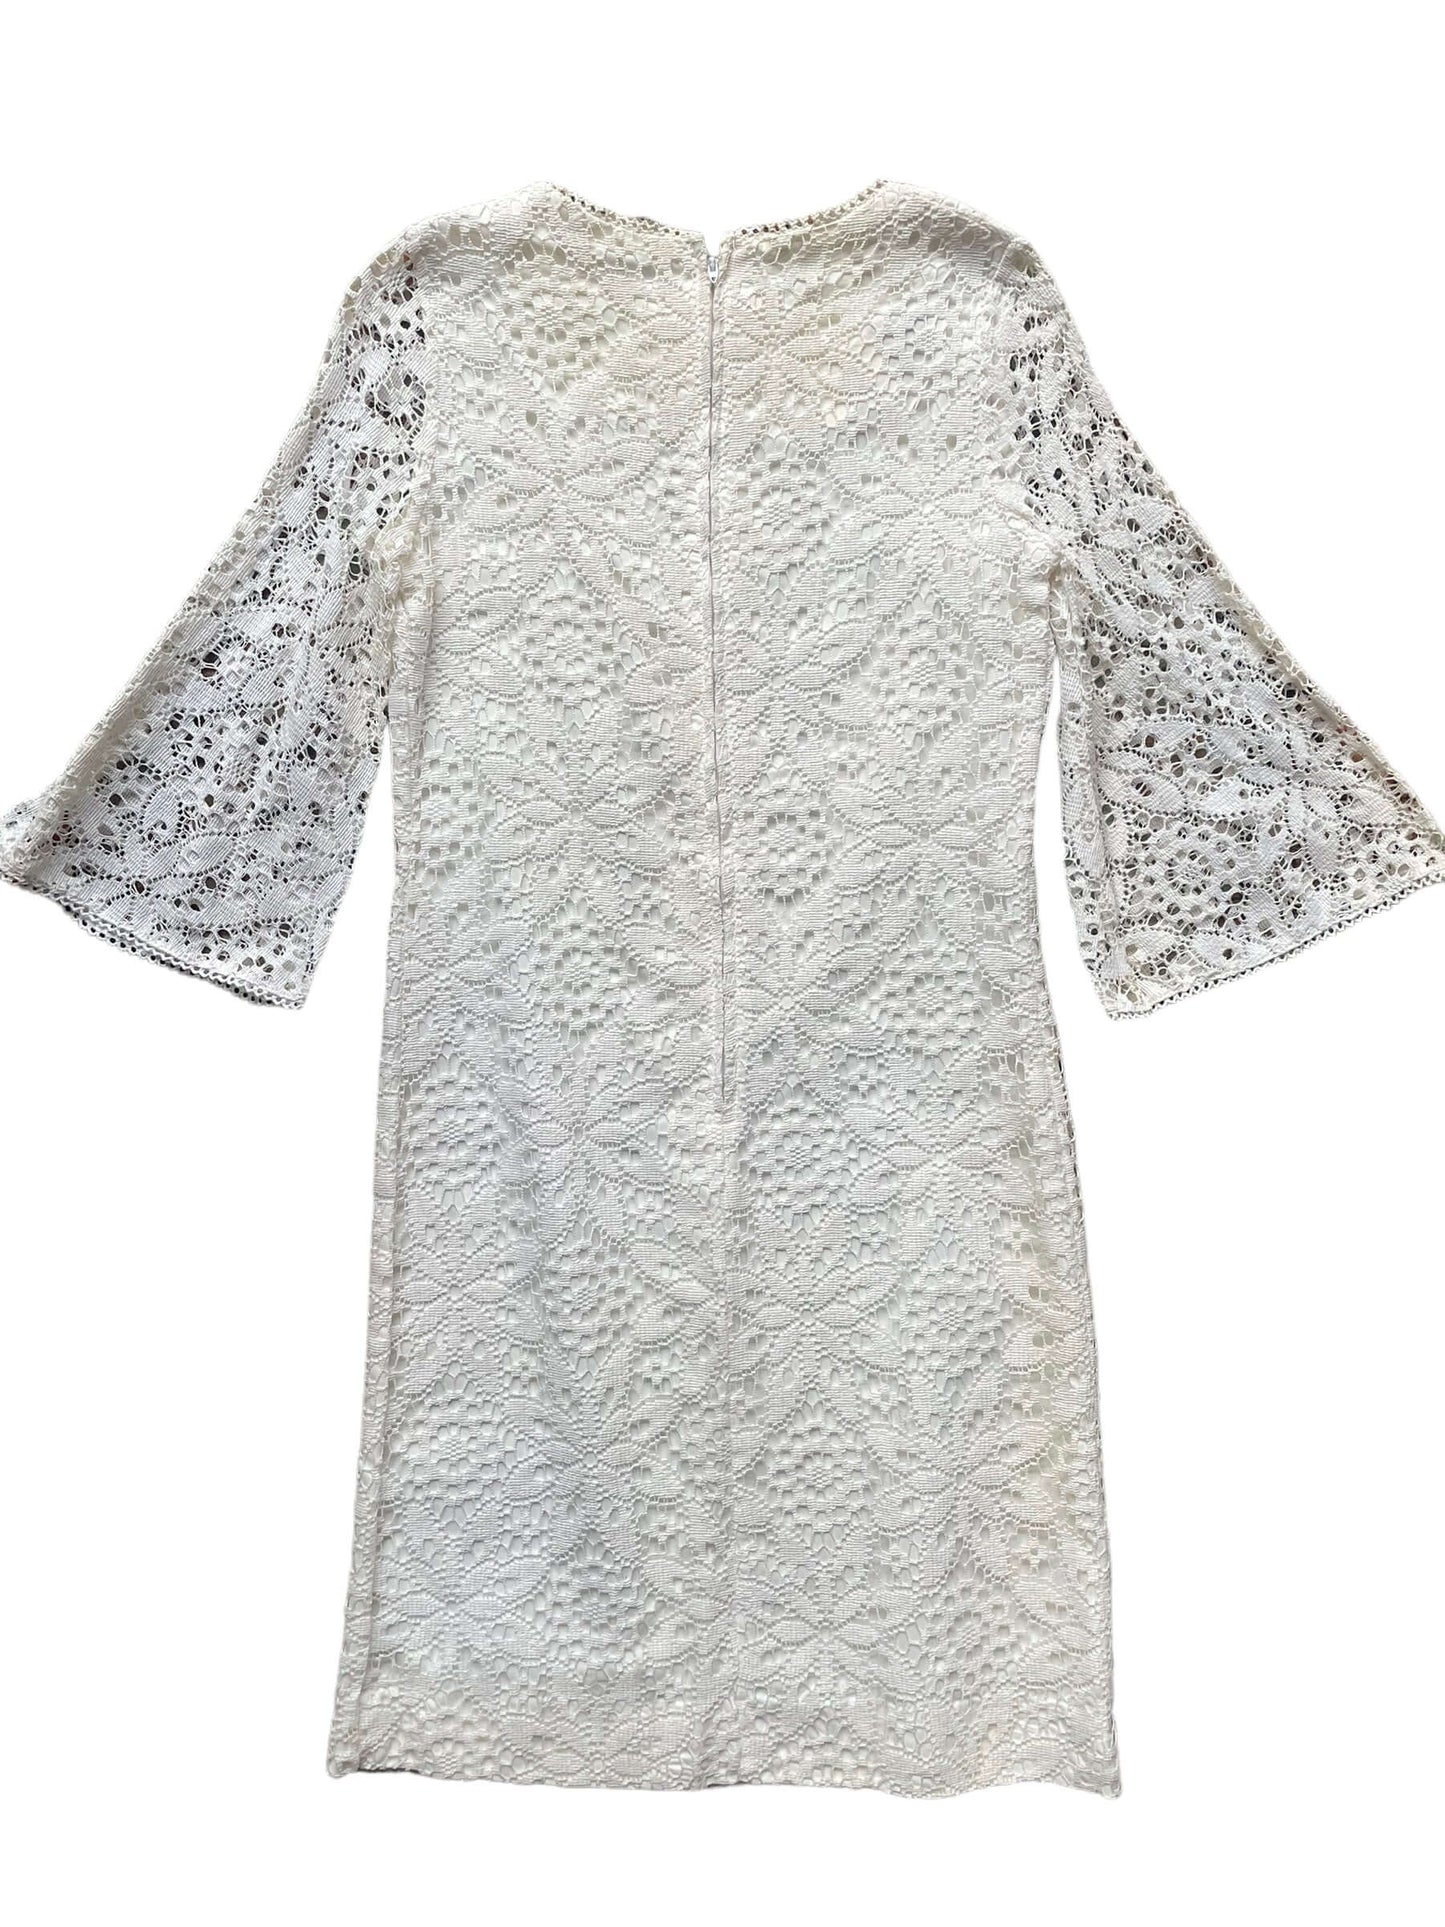 VIntage 1960s Deadstock Lace Dress |  Barn Owl Vintage Dresses | Seattle Vintage Ladies Clothing